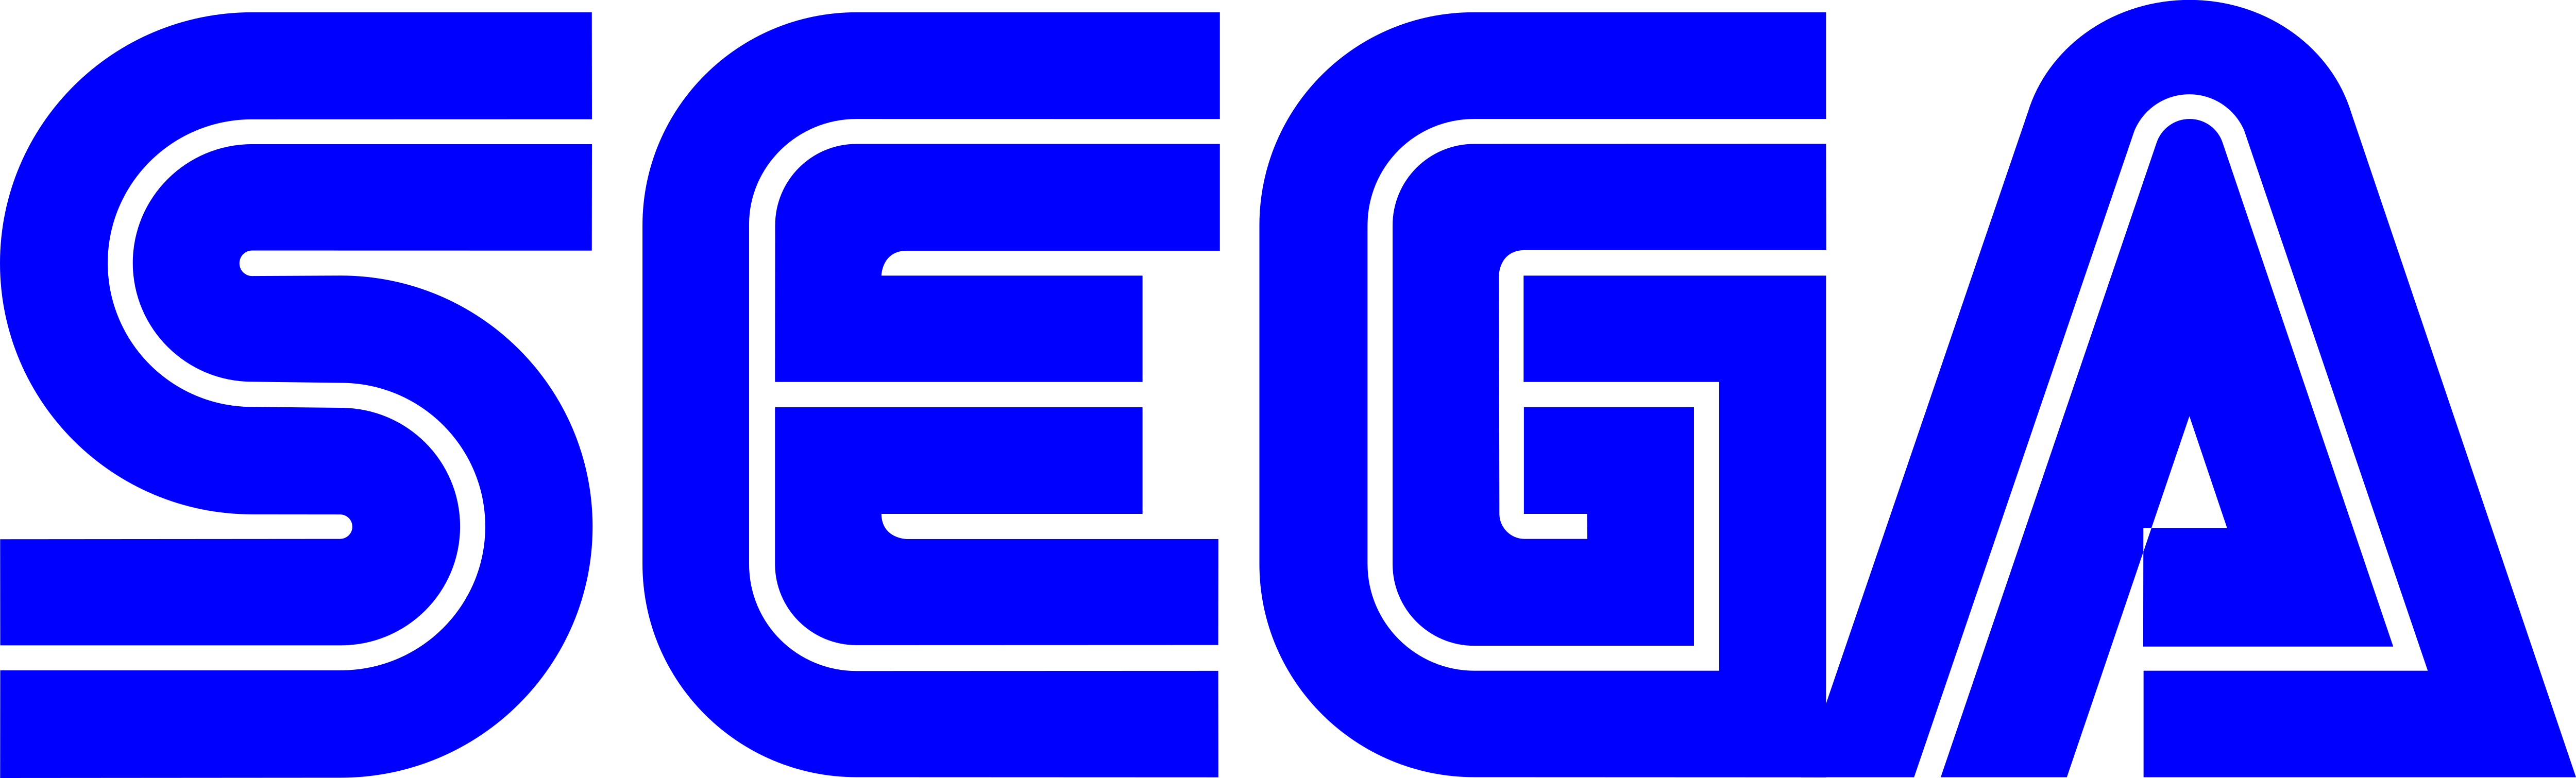 Sega - Sega Logo Black And Wh